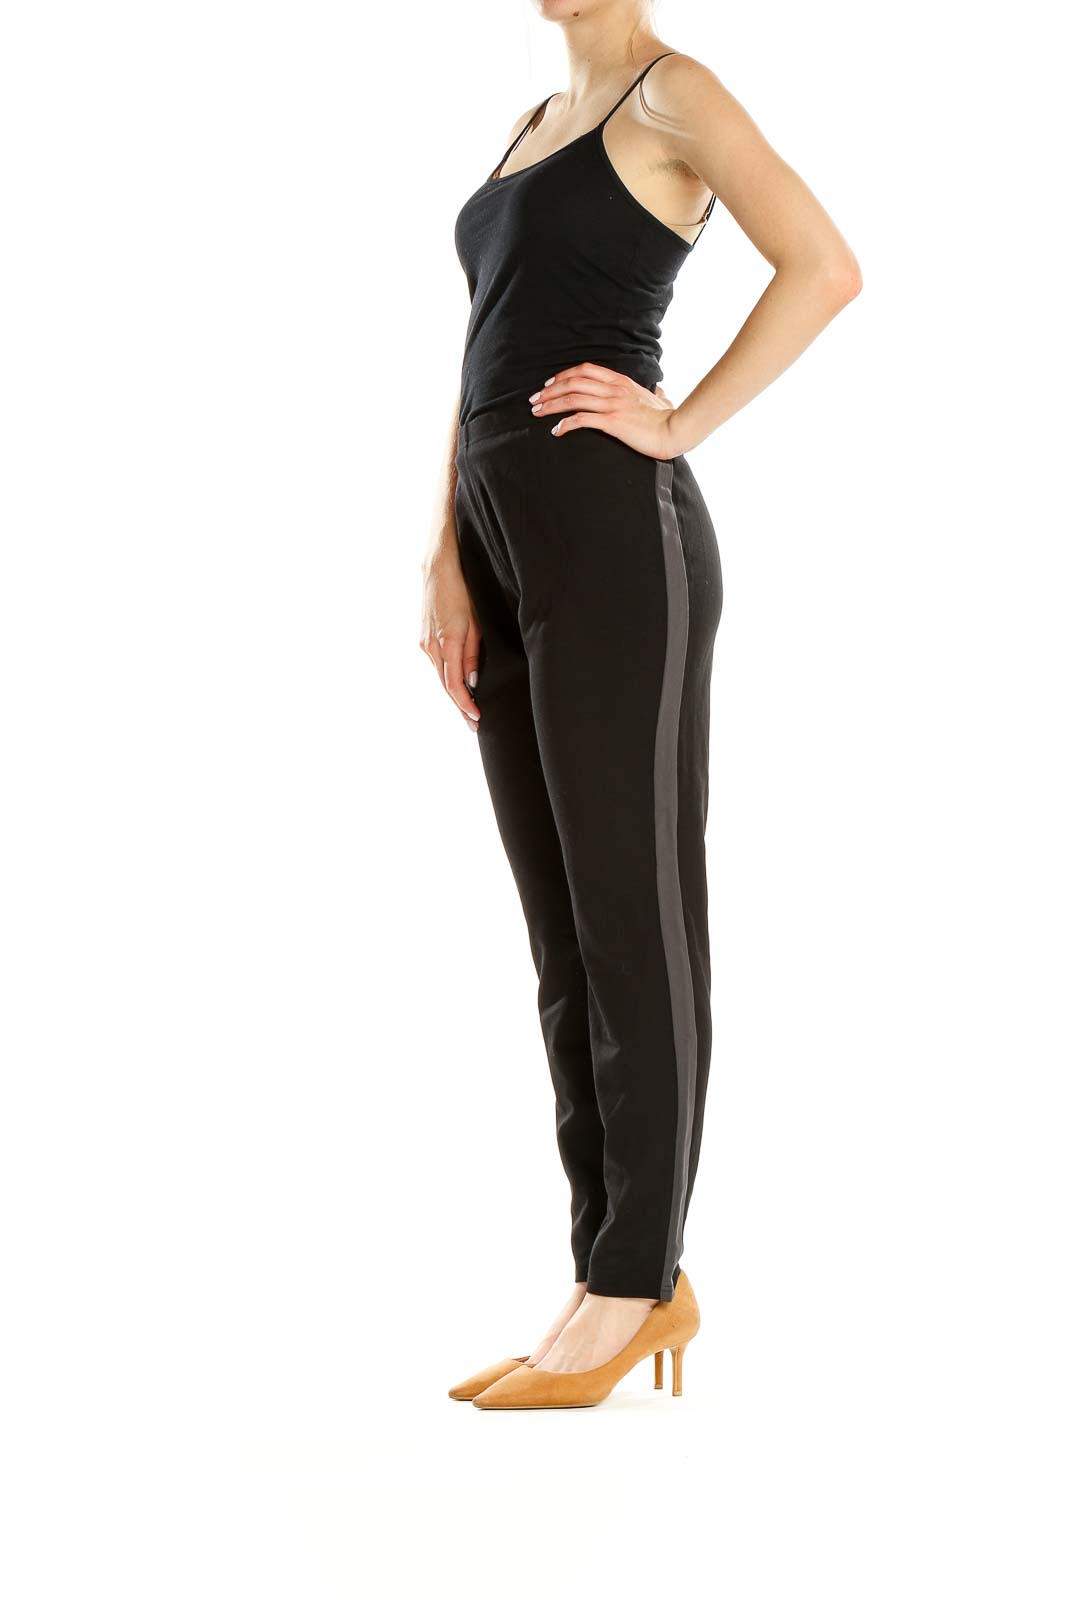 Simply Vera Vera Wang - Black Side Stripe Leggings Spandex Rayon Nylon